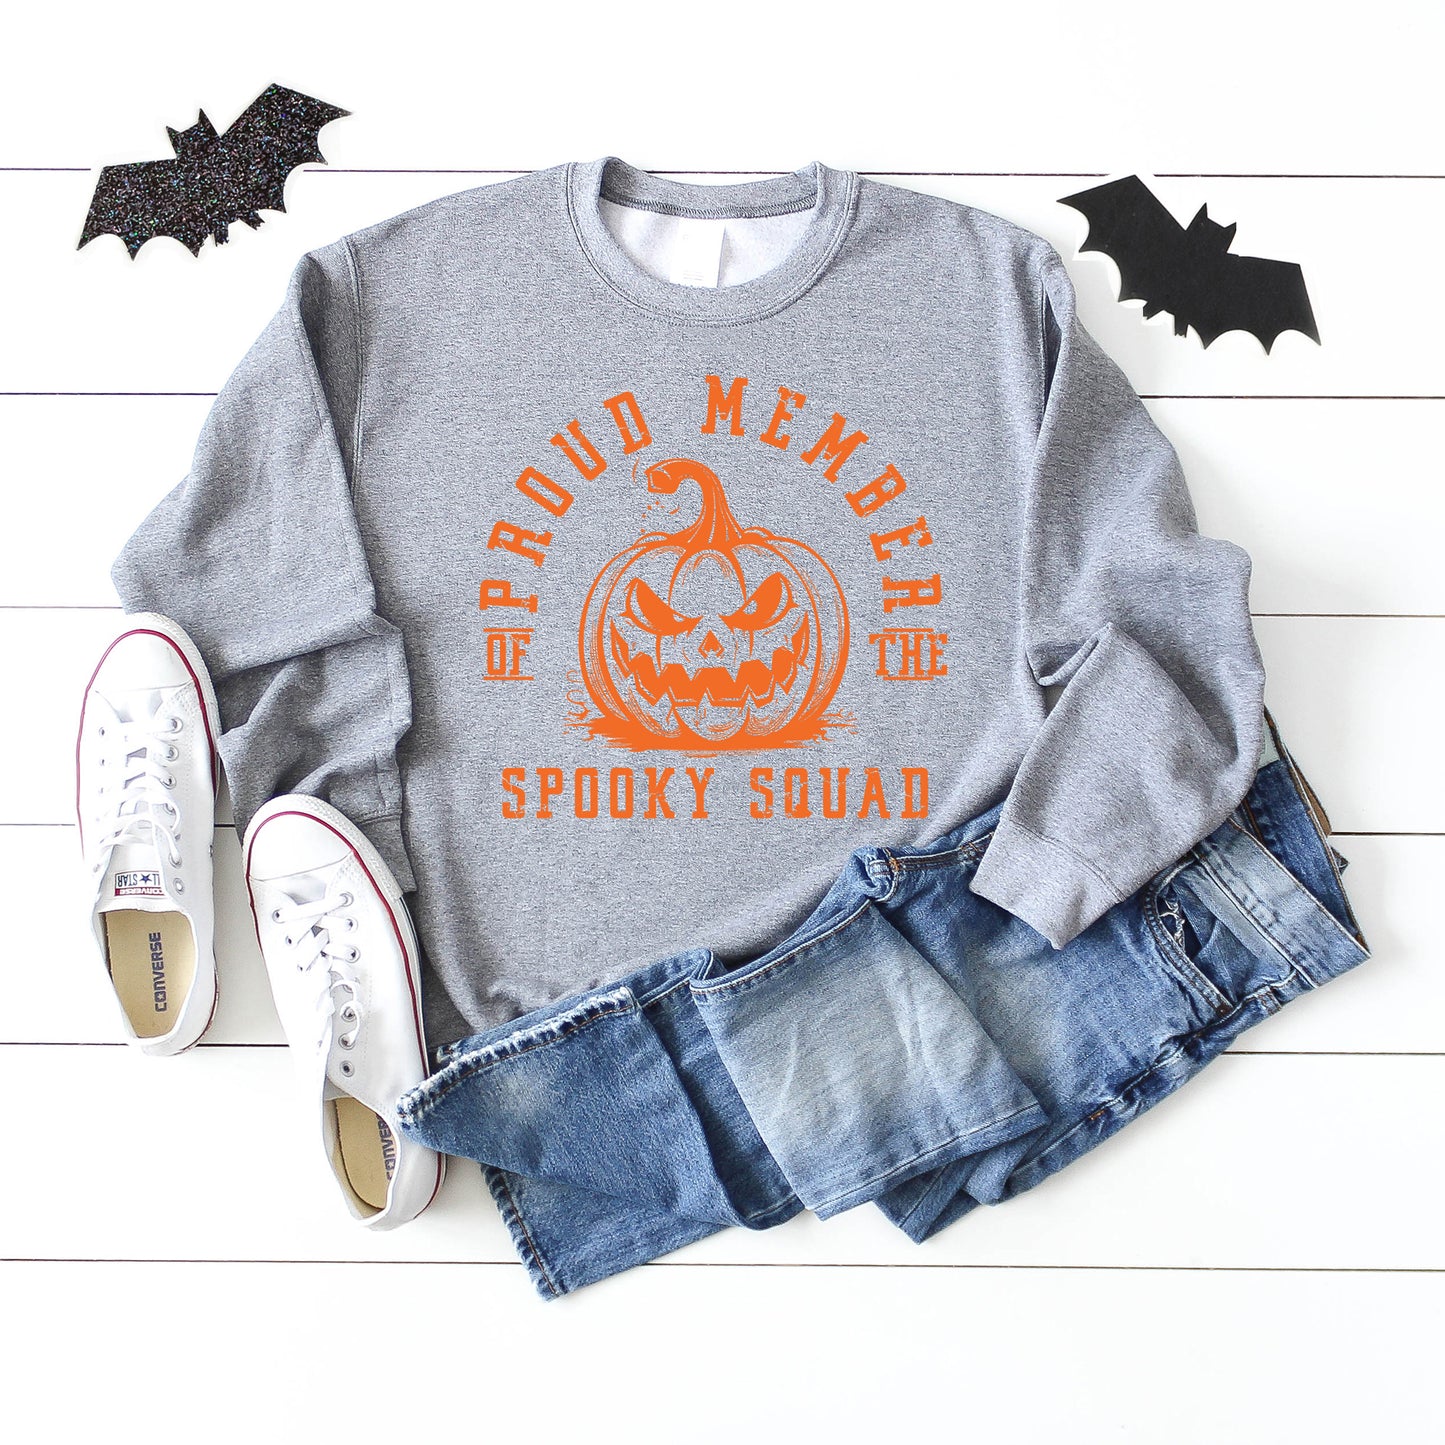 Proud Member Spooky Squad | Sweatshirt